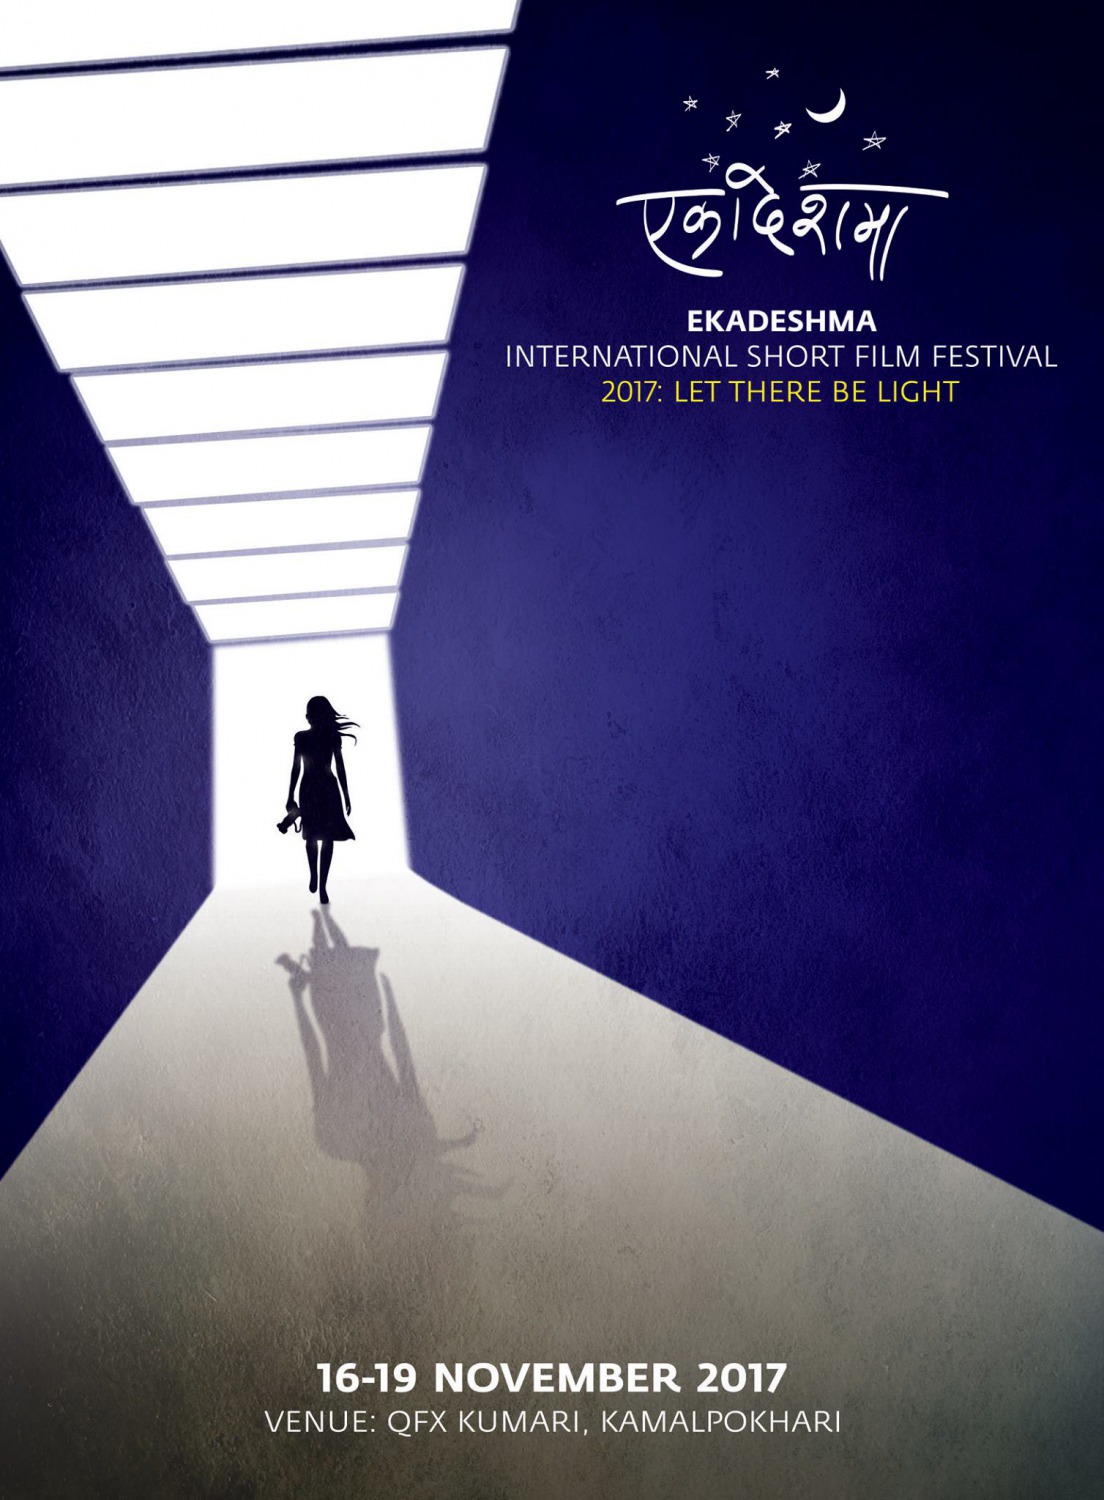 Extra Large TV Poster Image for Ekadeshma International Short Film Festival 